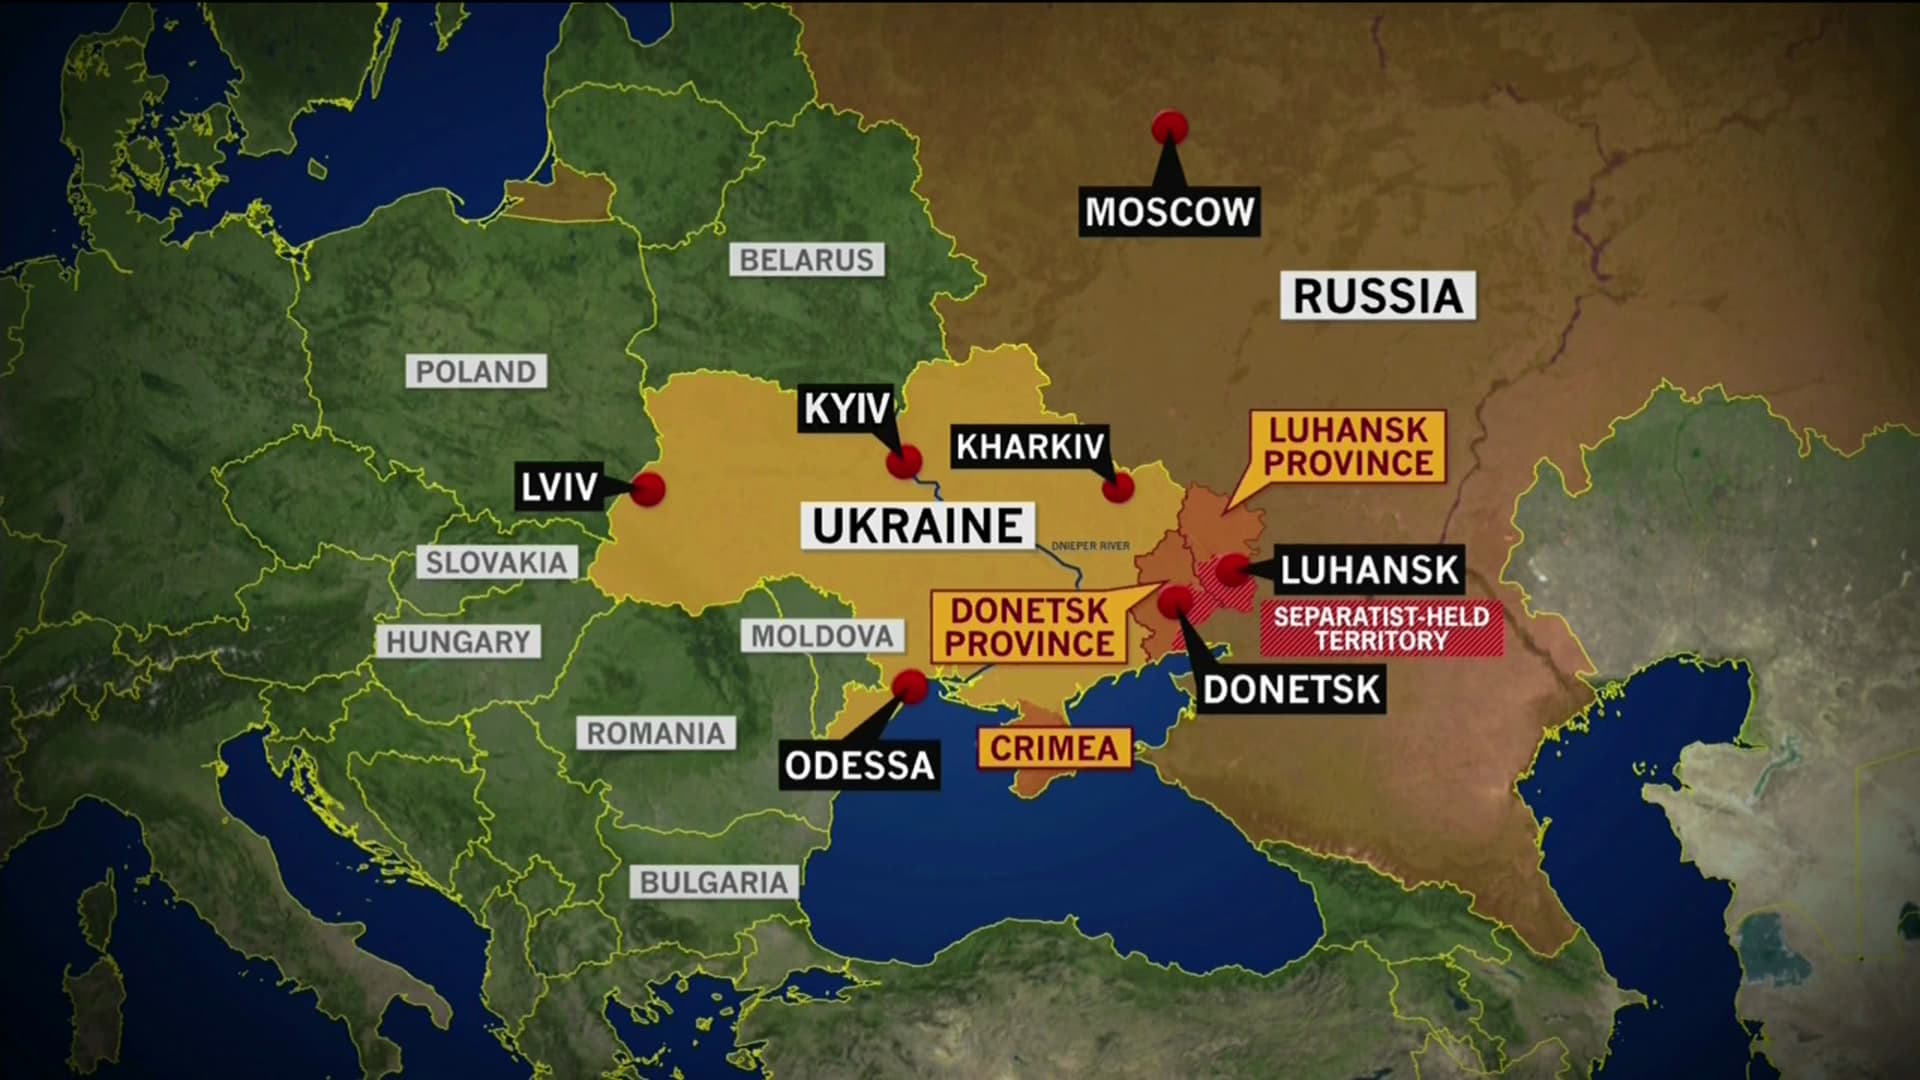 Ukraine Russia news: U.S., allies prepare harsh new sanctions as Putin orders attack